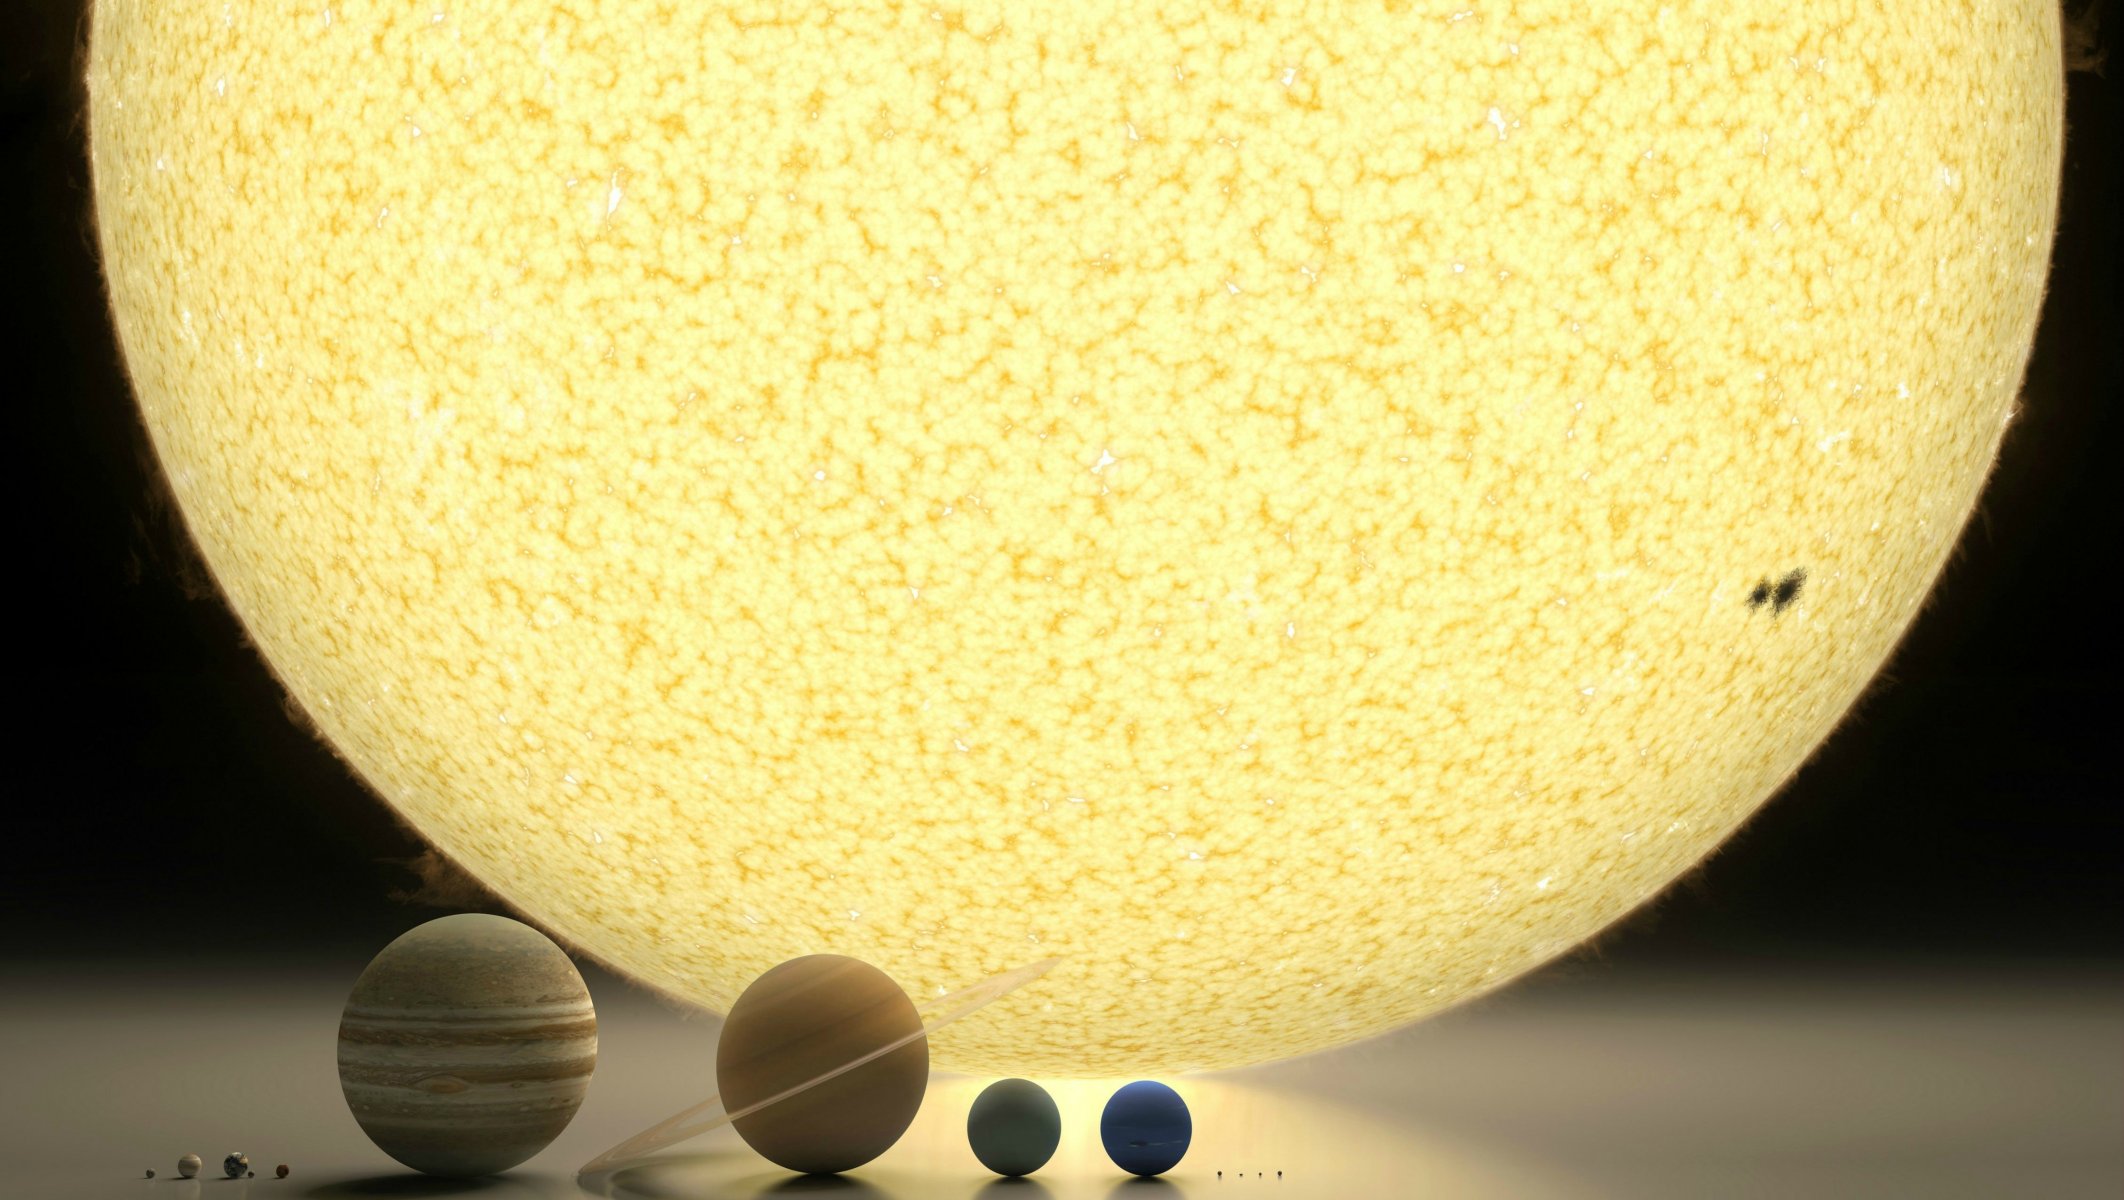 Размеры солнца и планет